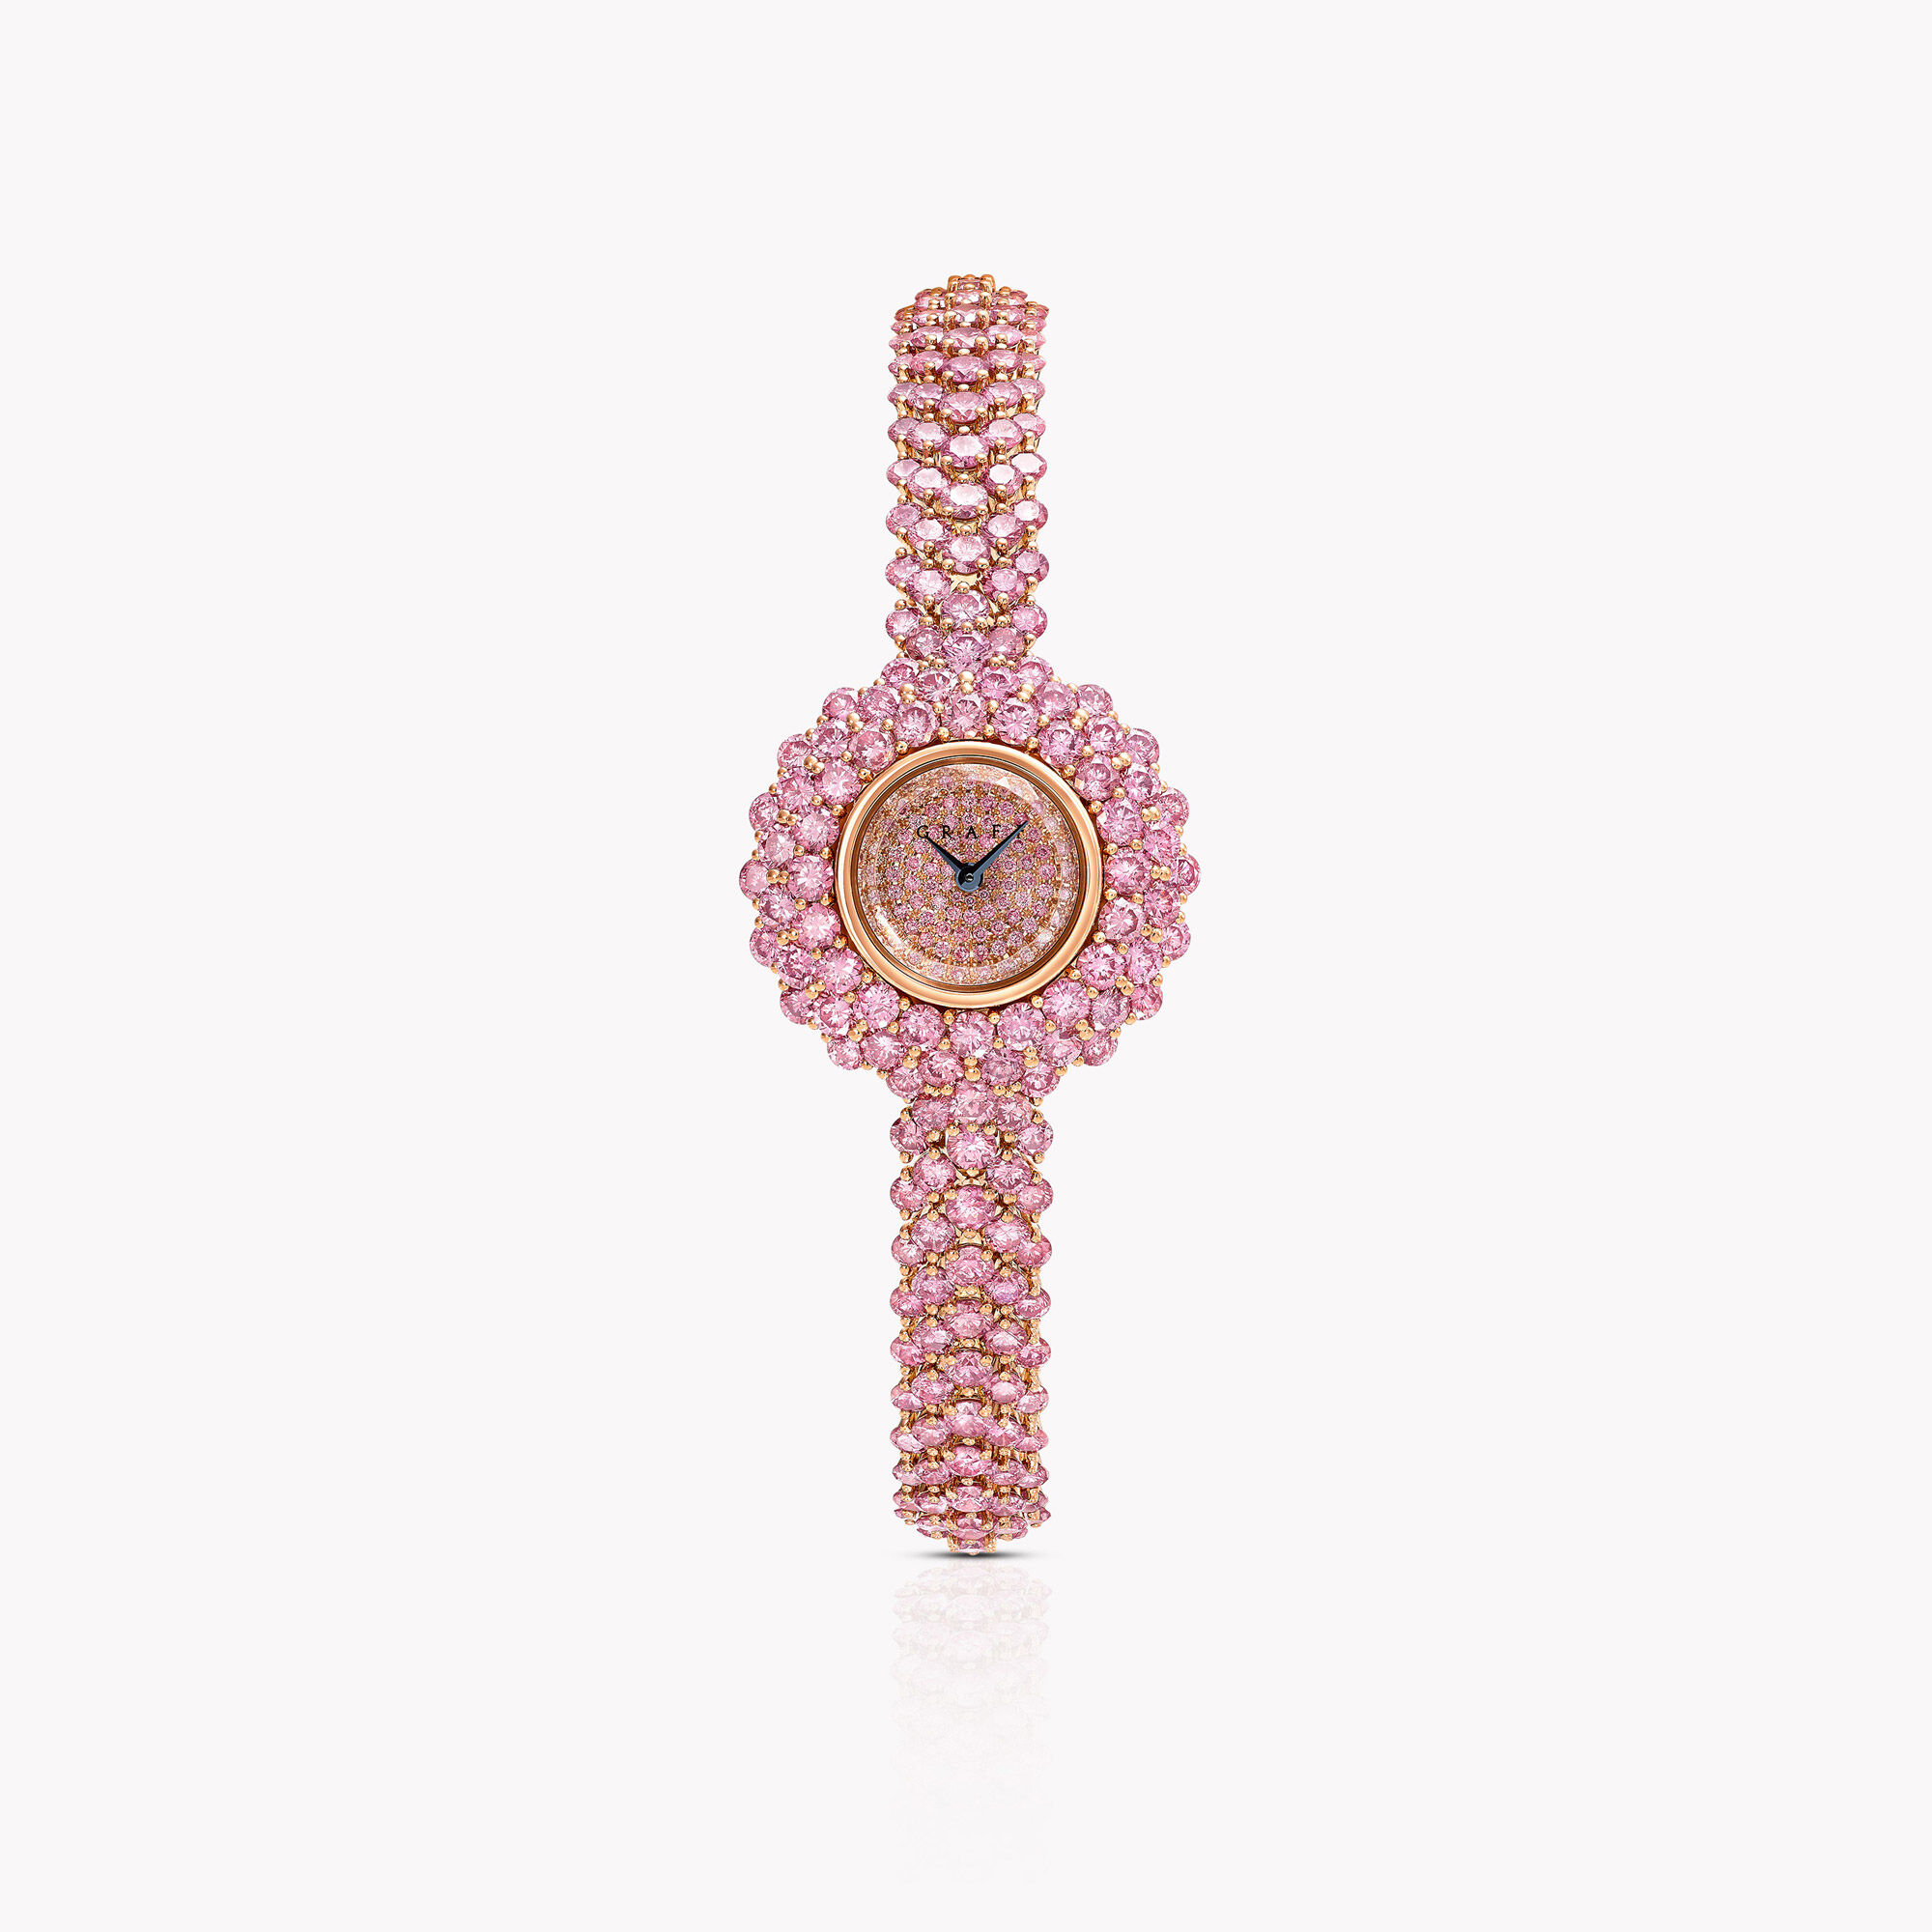 Graff Pink Diamond Cocktail unique timepiece in Rose Gold metal